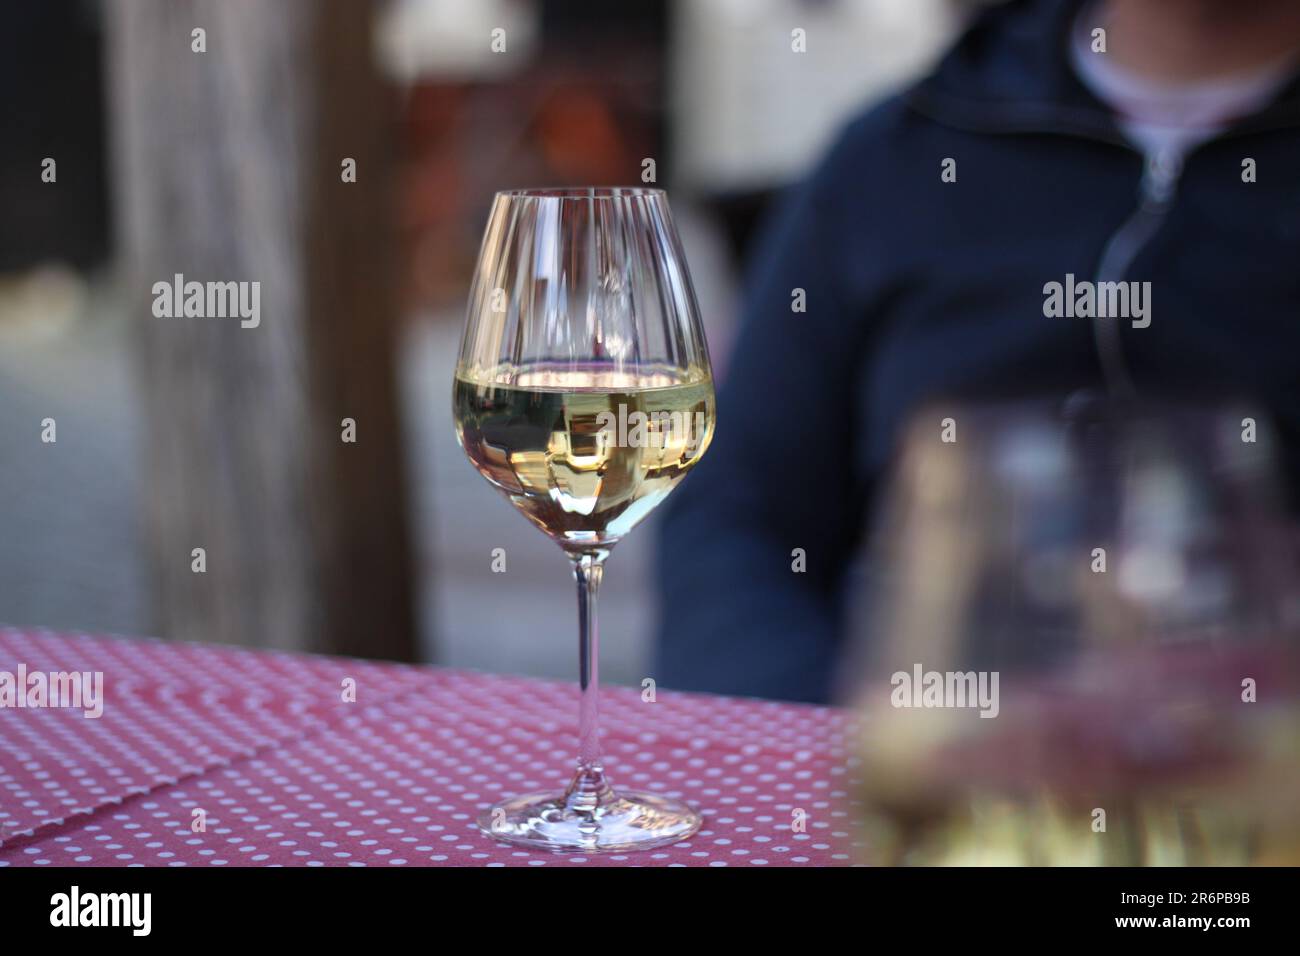 A glass of sweet and fragrant wine in Zmajevac, Baranja, Croatia Stock Photo